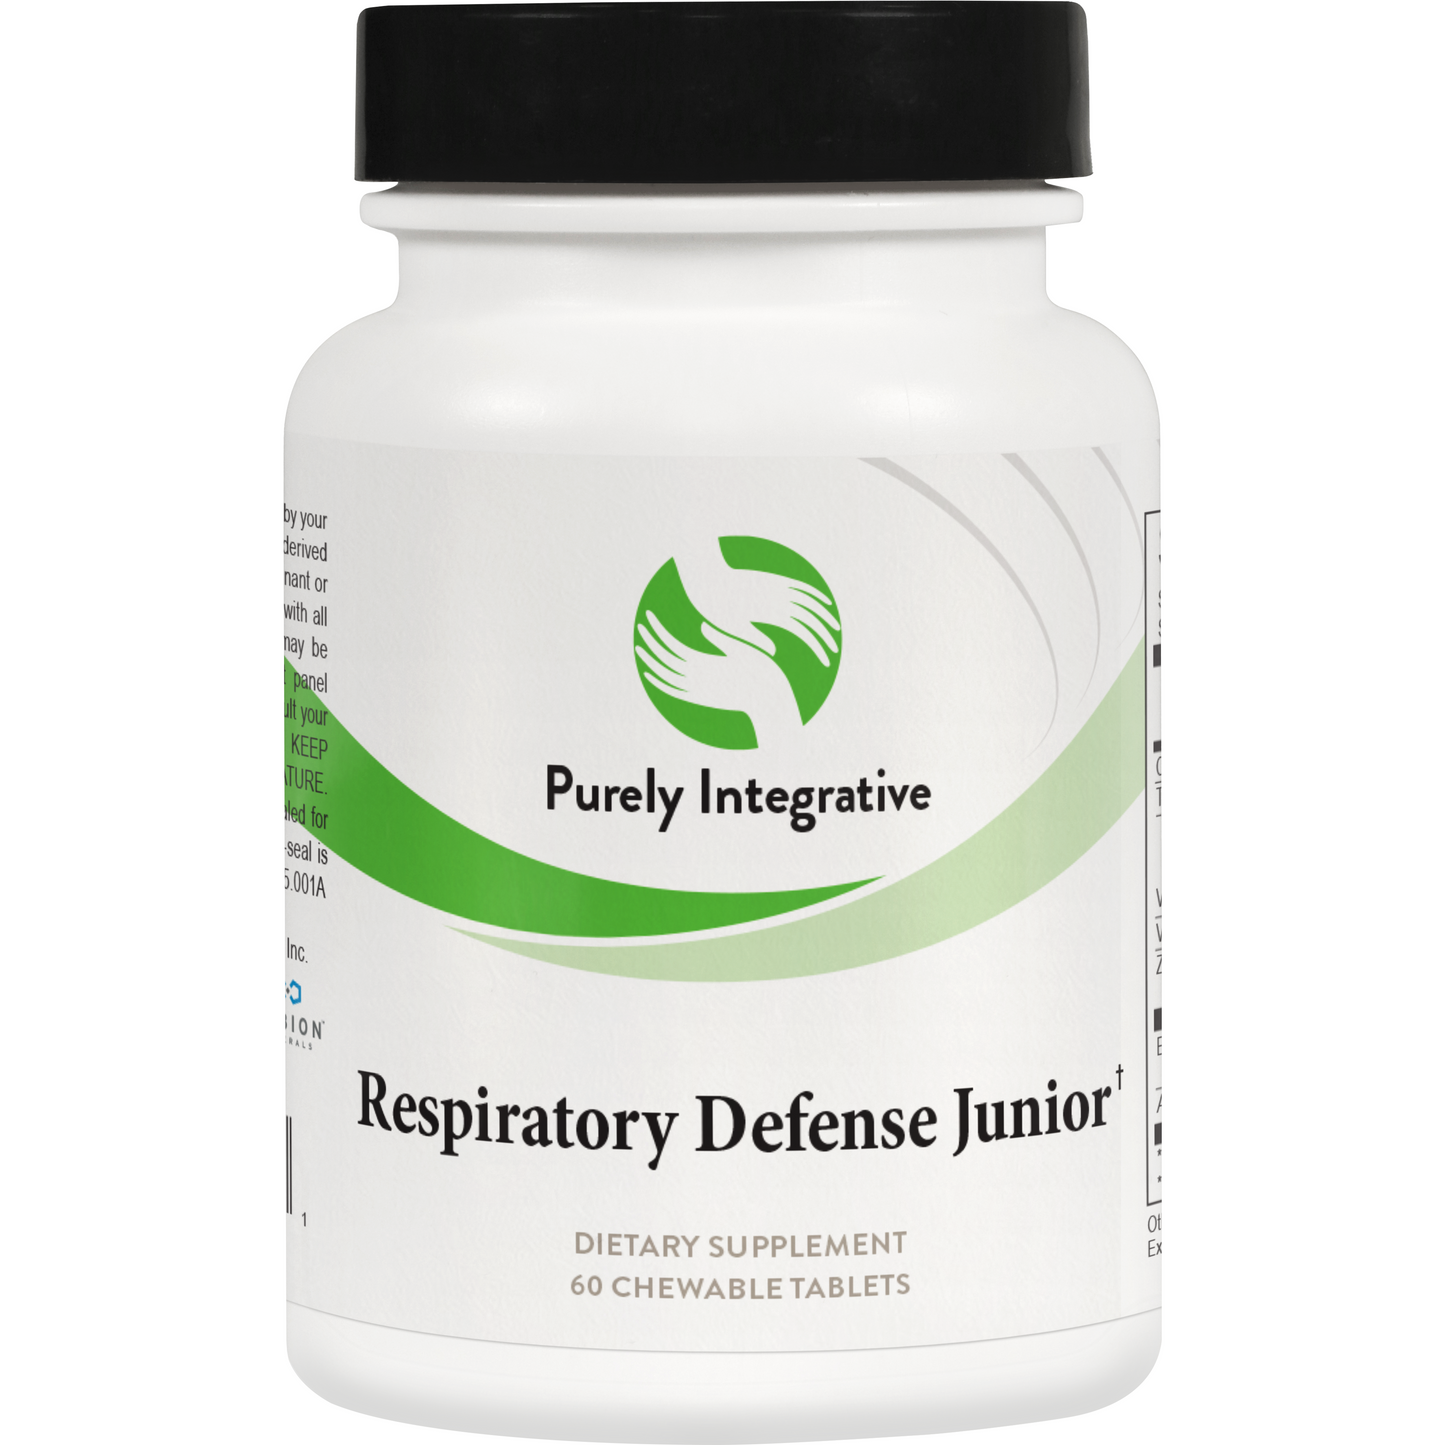 Respiratory Defense Junior